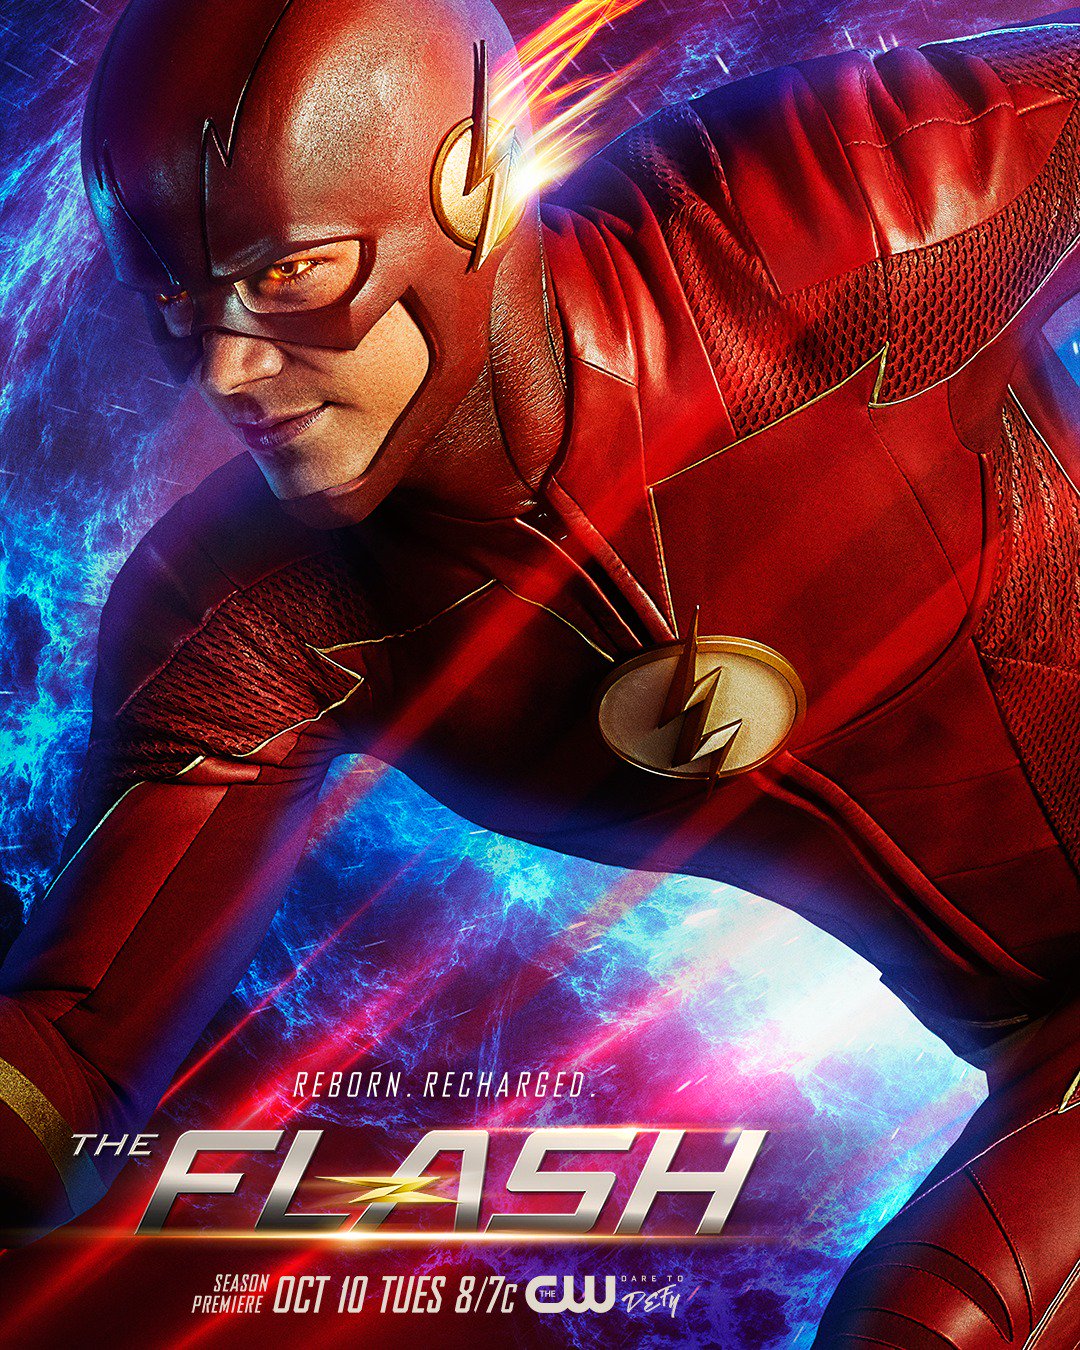 The Flash 2017: Season 4